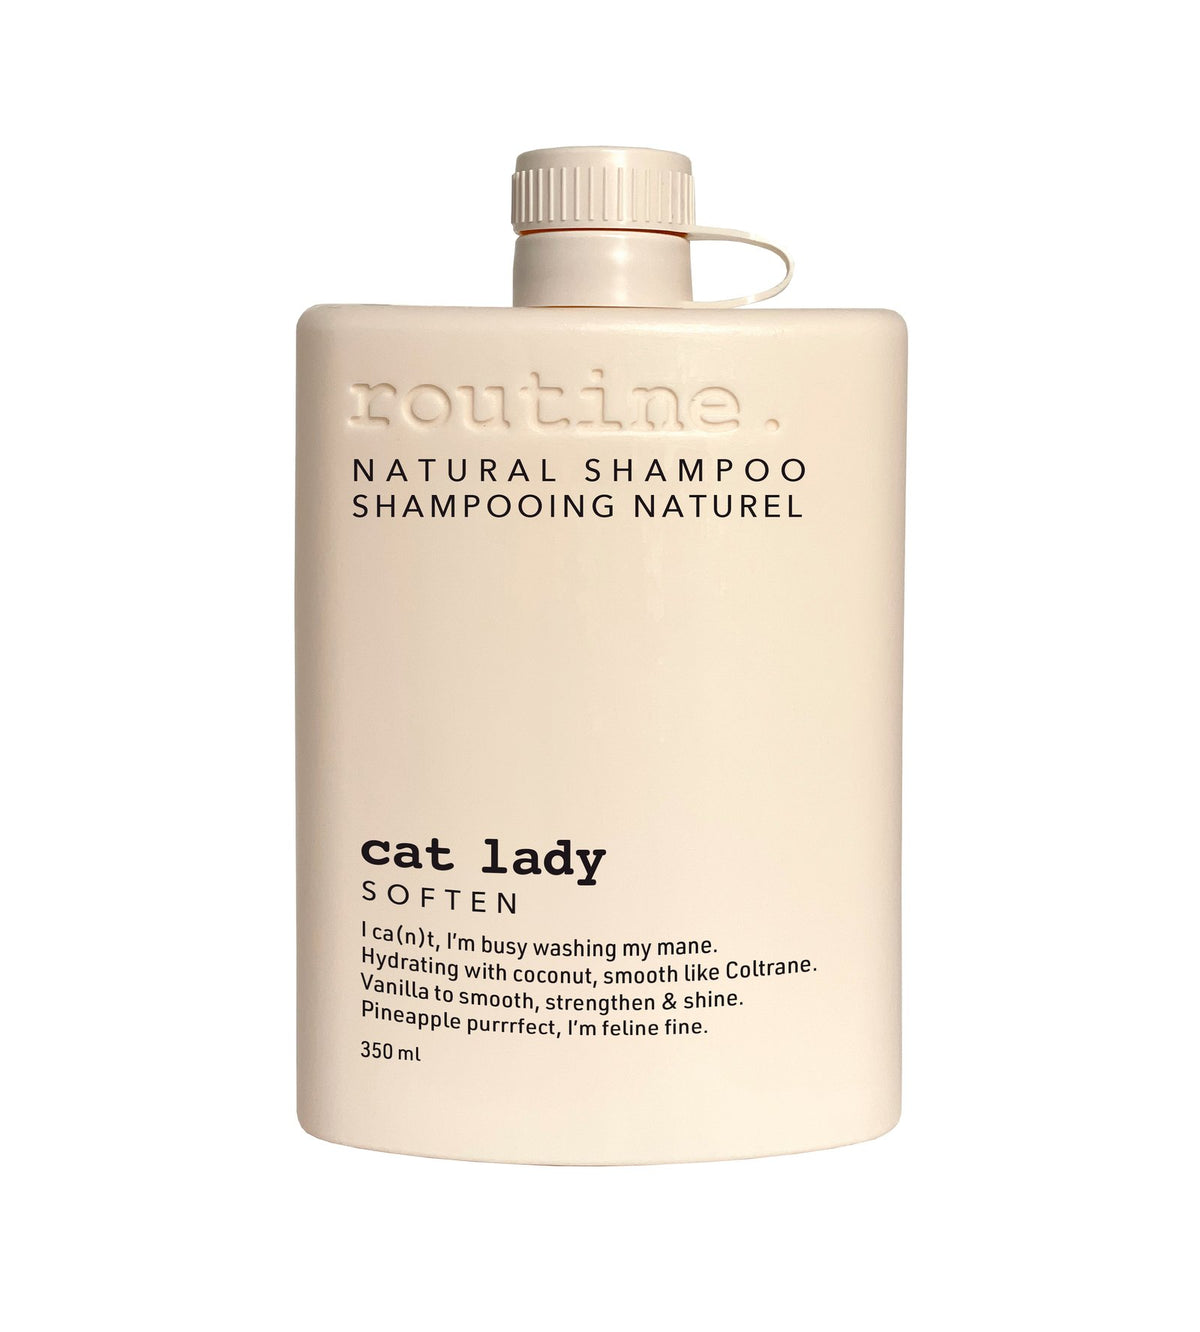 CAT LADY SOFTENING SHAMPOO 350 ML - Routine Goods